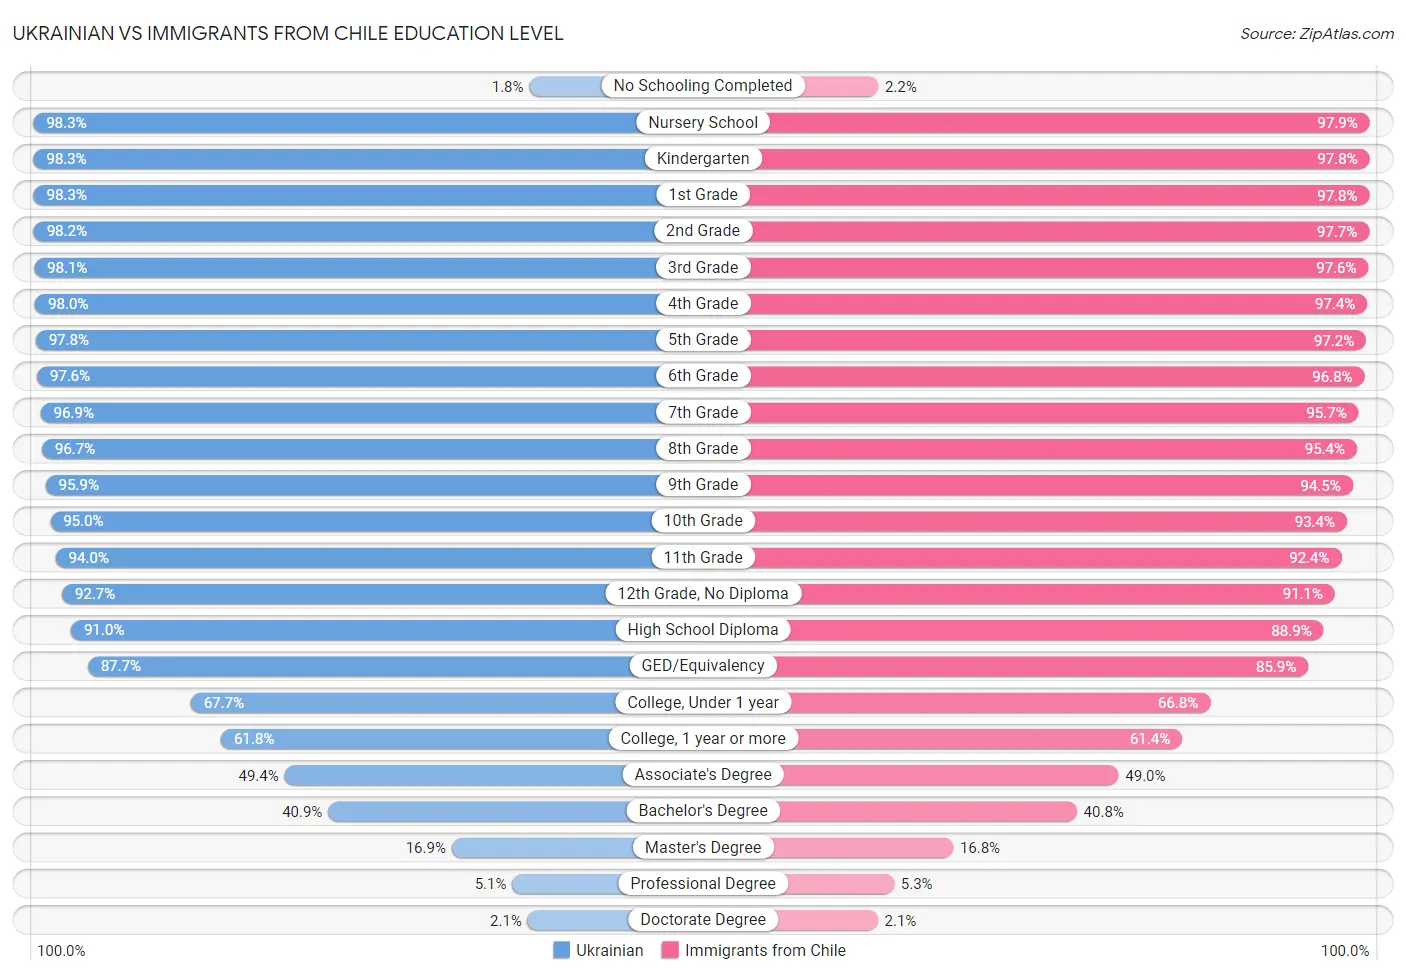 Ukrainian vs Immigrants from Chile Education Level